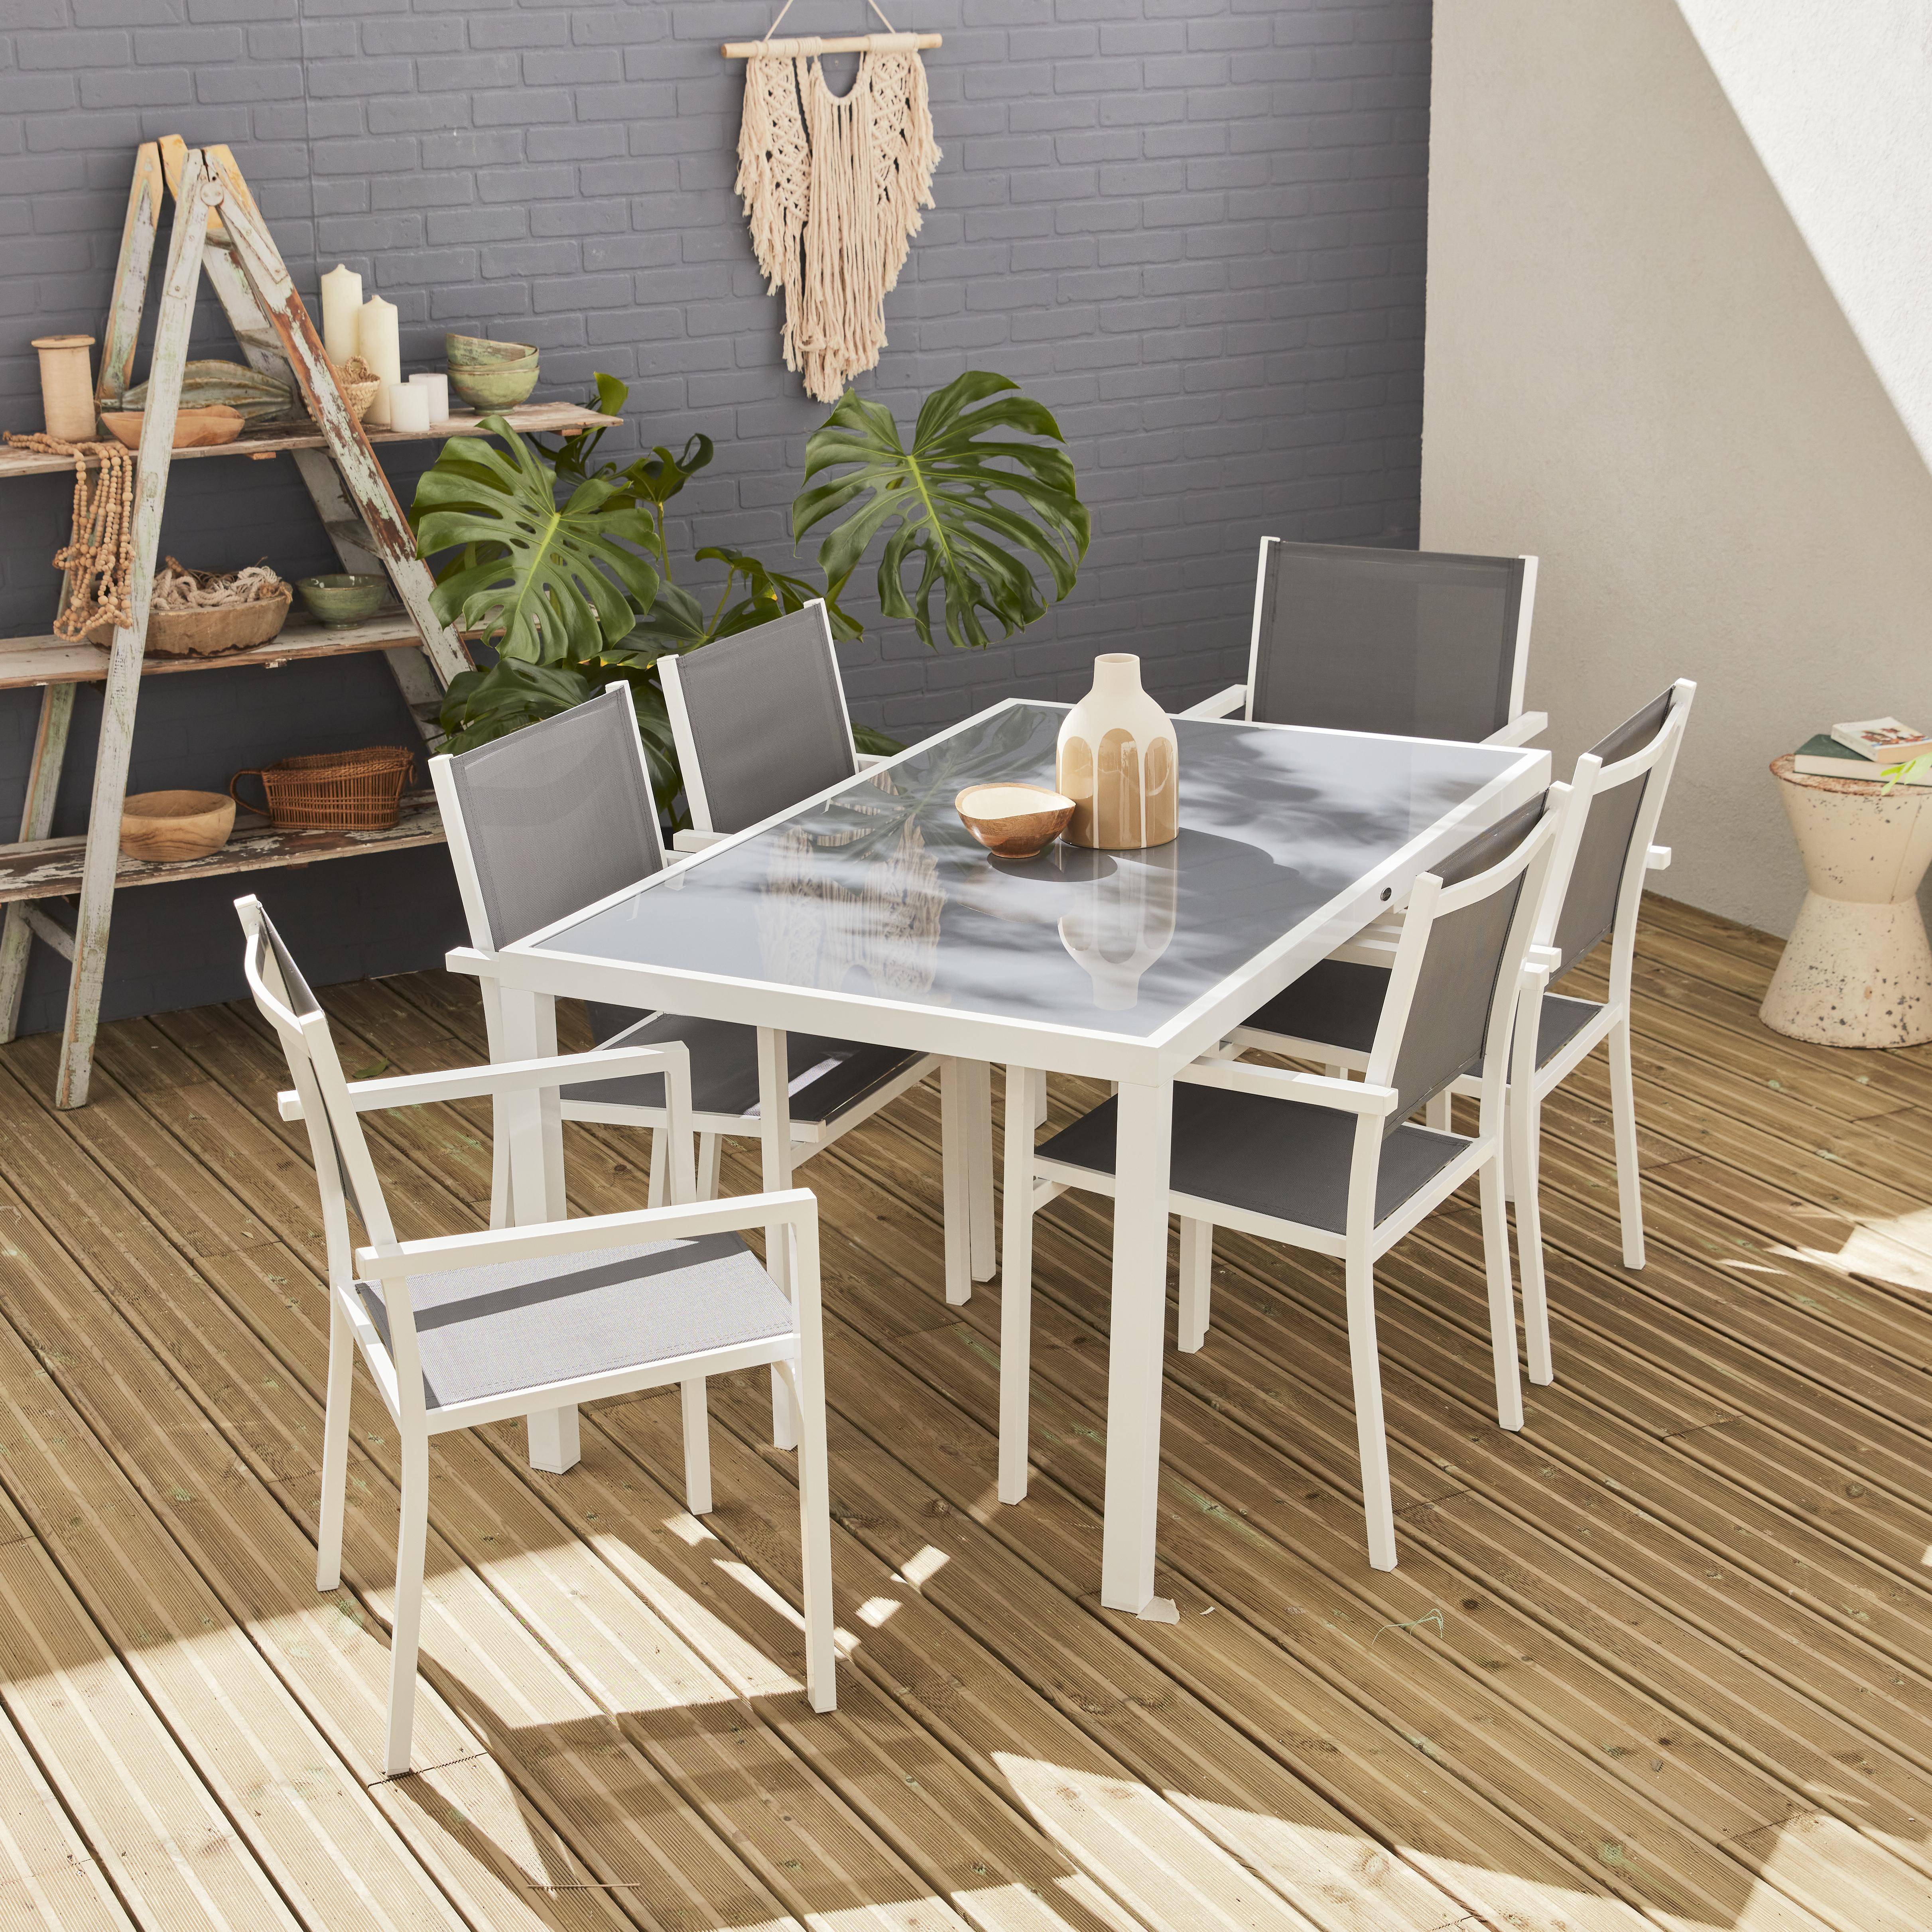 Gartengarnitur aus Aluminium und Textilene - Capua - Weiß, Grau - 1 großer rechteckiger Tisch, 6 stapelbare Sessel Photo1